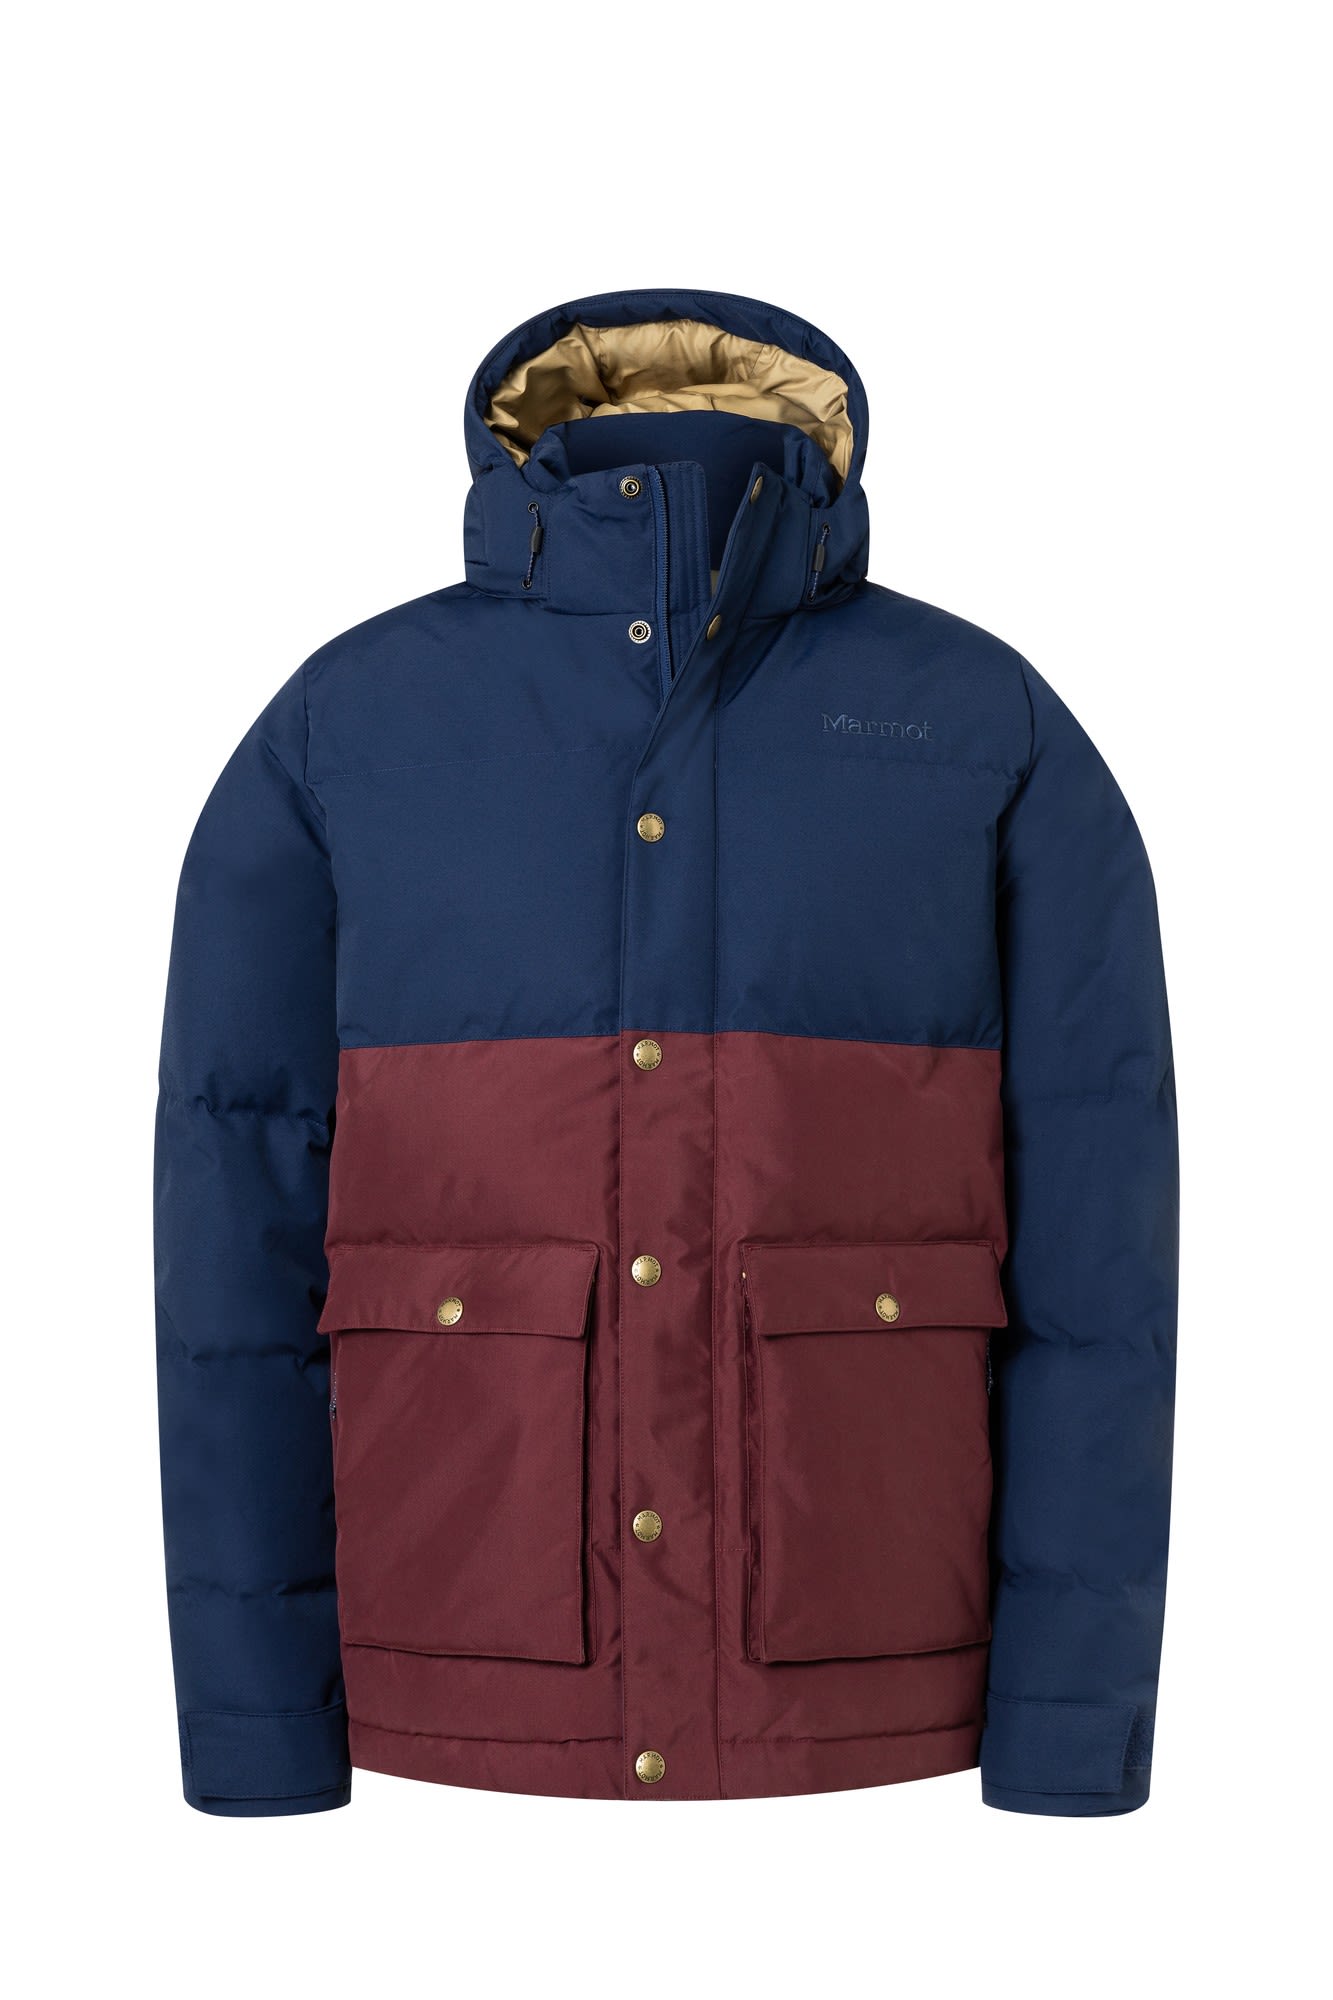 Marmot Fordham Jacket Colorblock - Blau - Rot- Male Daunen Ponchos und Capes- Grsse S - Farbe Arctic Navy - Port Royal unter Marmot